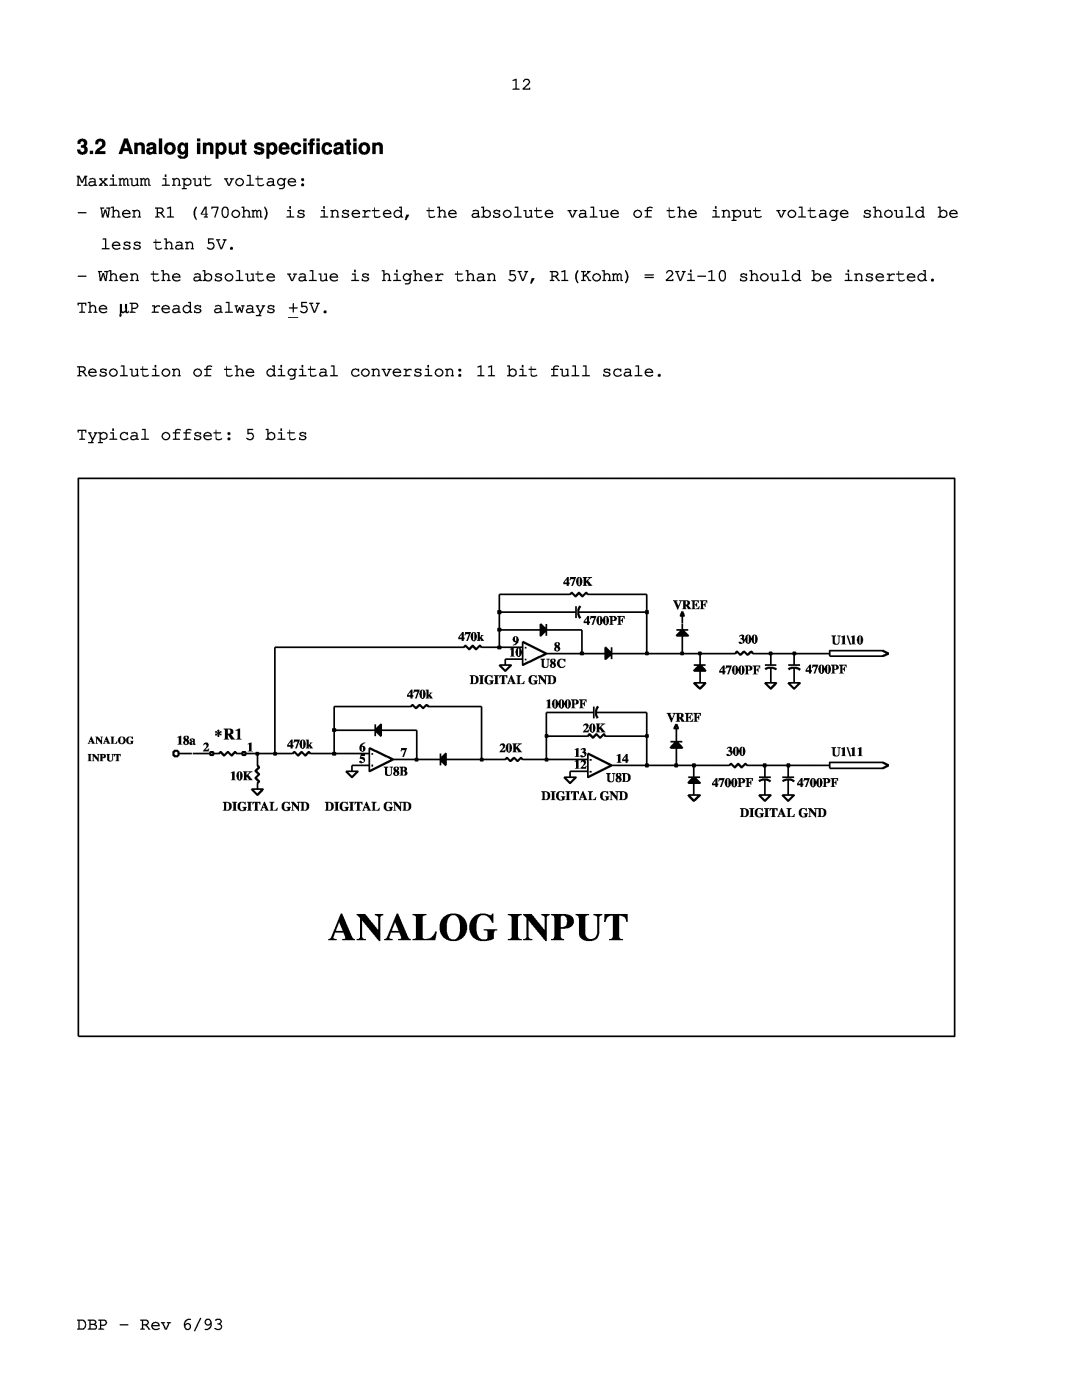 Elmo DBP SERIES manual Analog Input, Analog input specification 